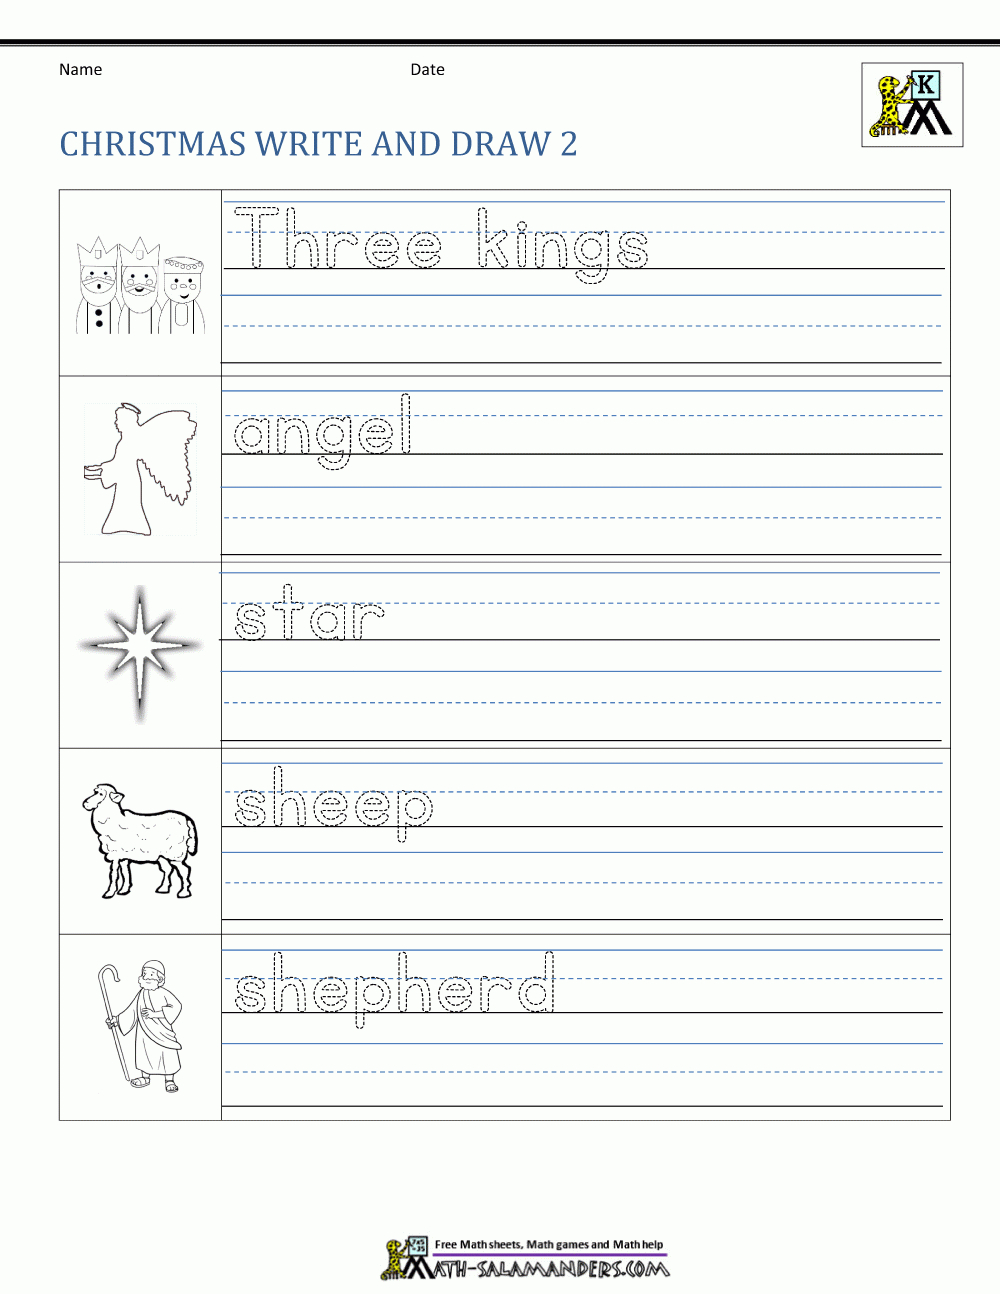 Free Christmas Worksheets For Kids - Free Christmas Printables For Kids